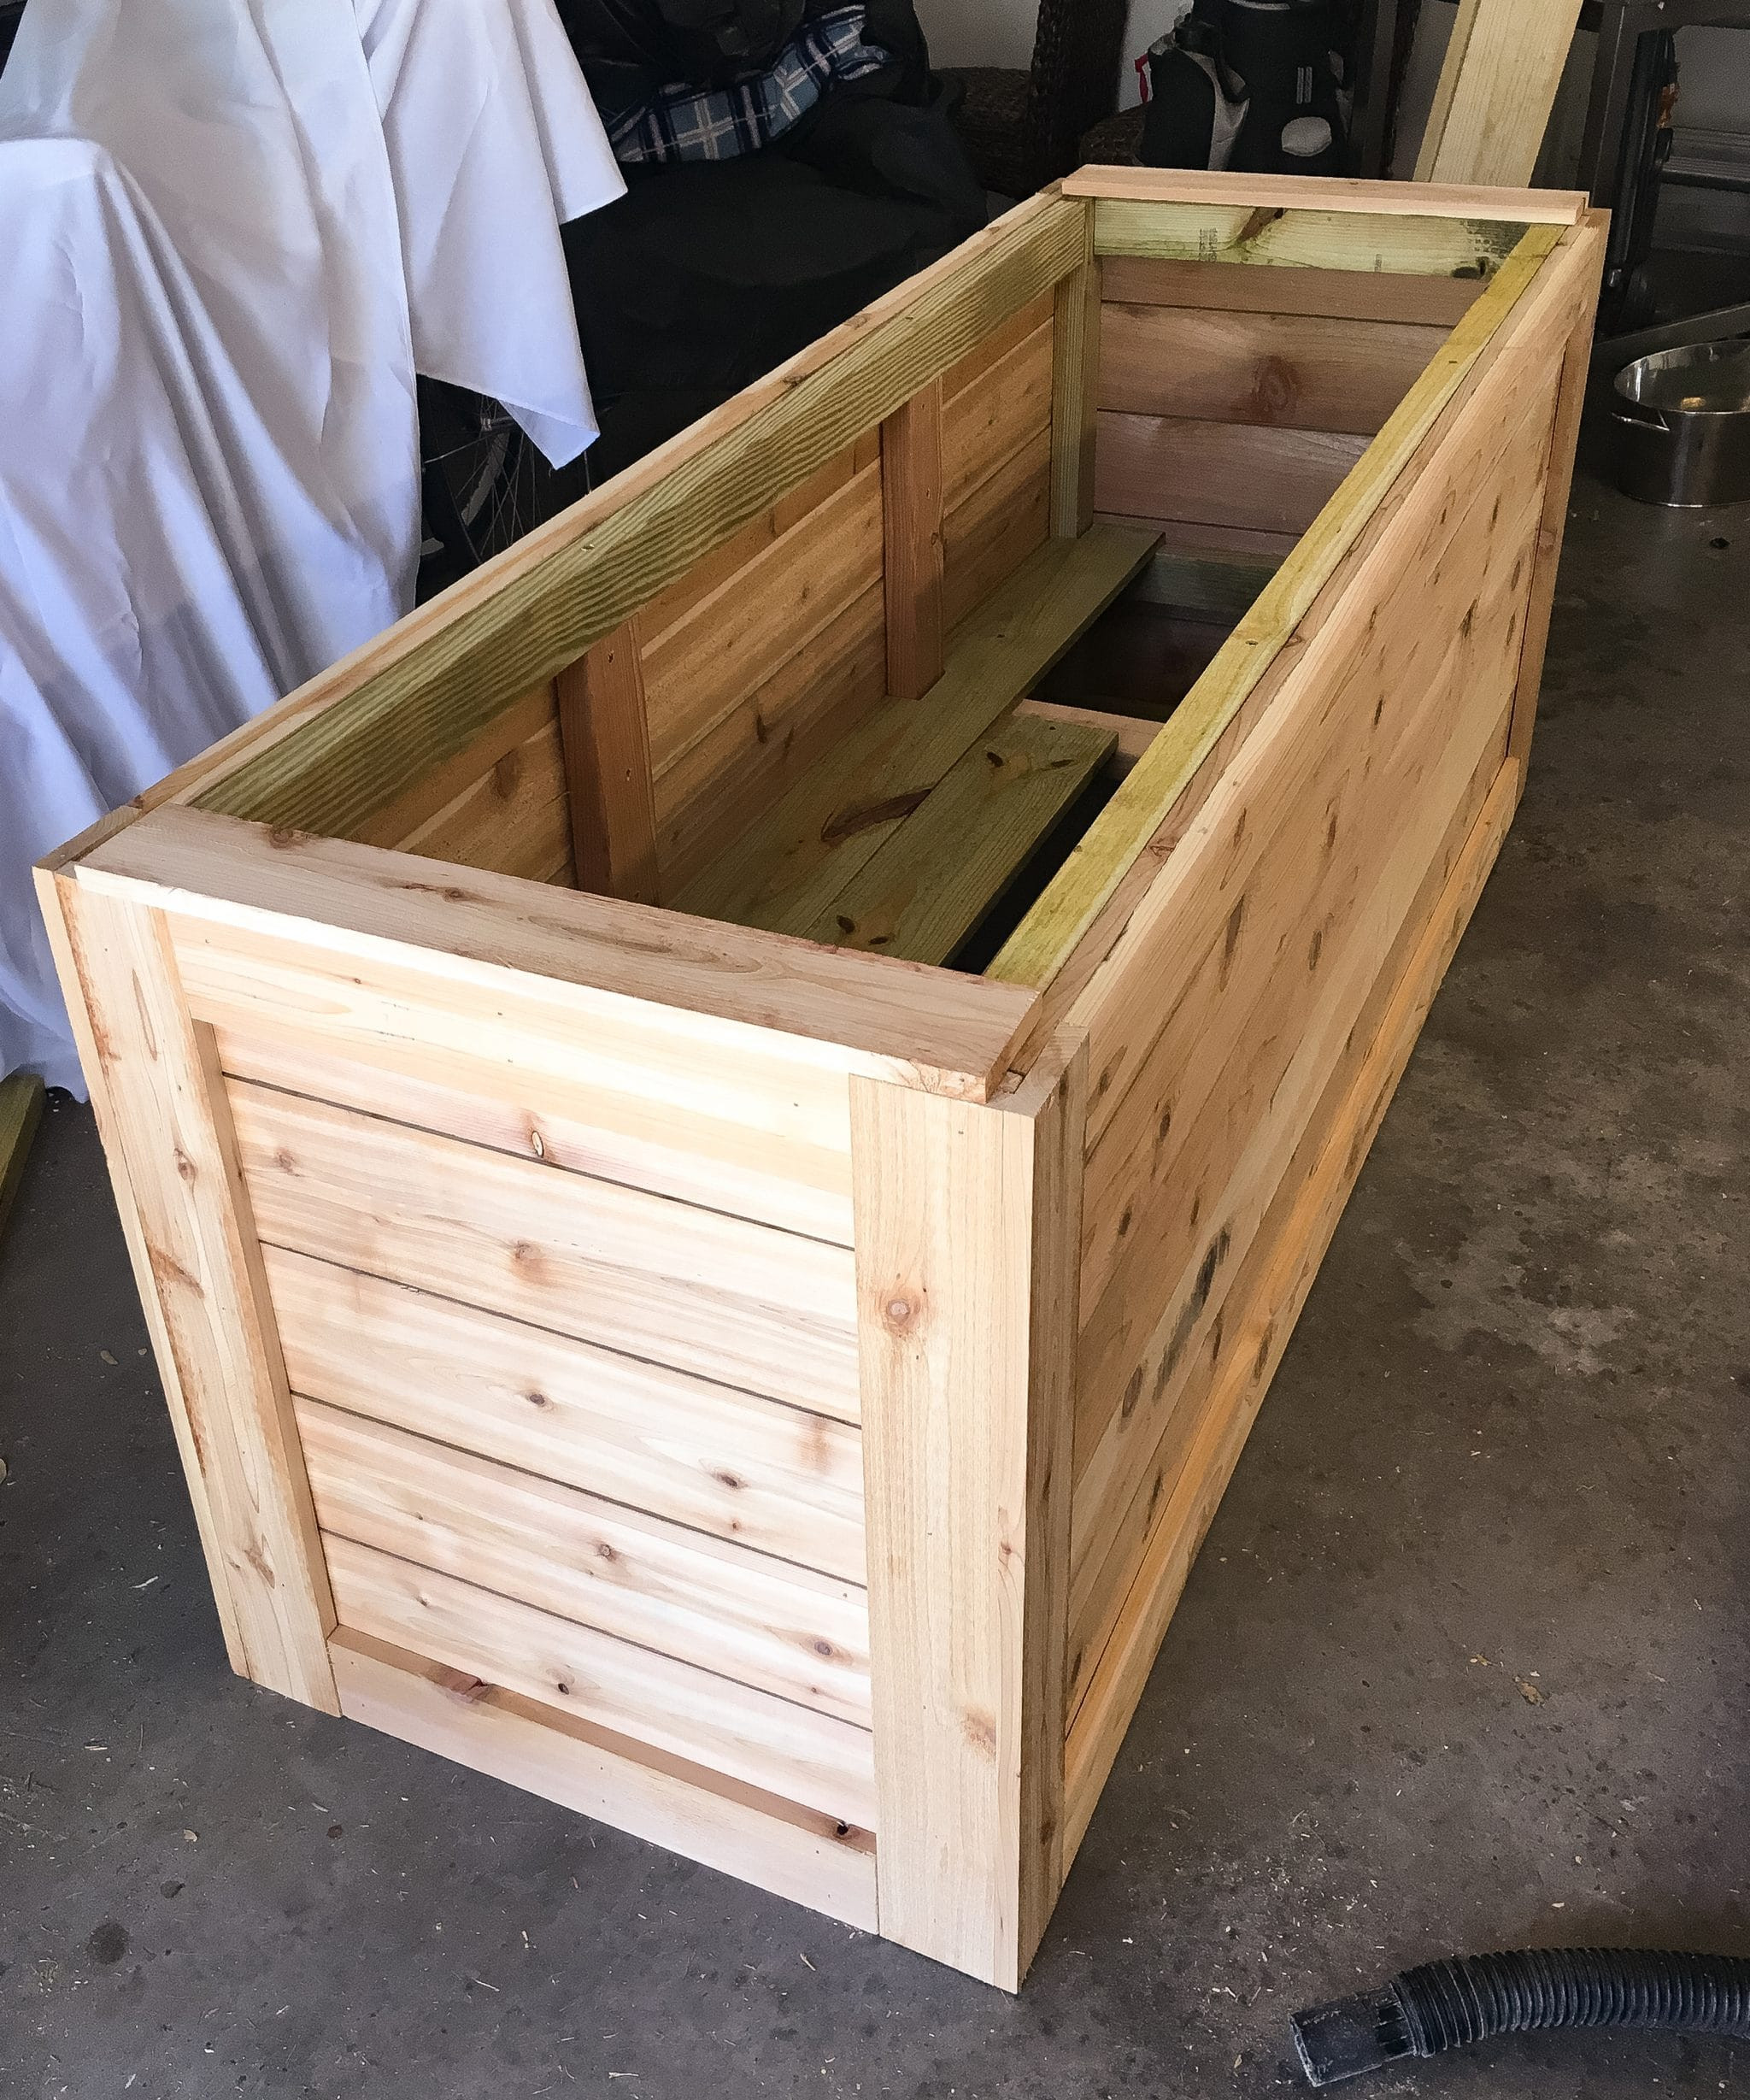 Best ideas about DIY Wood Planters
. Save or Pin BACKYARD DIY SERIES PART IIII Cedar Wood Planter Box Now.